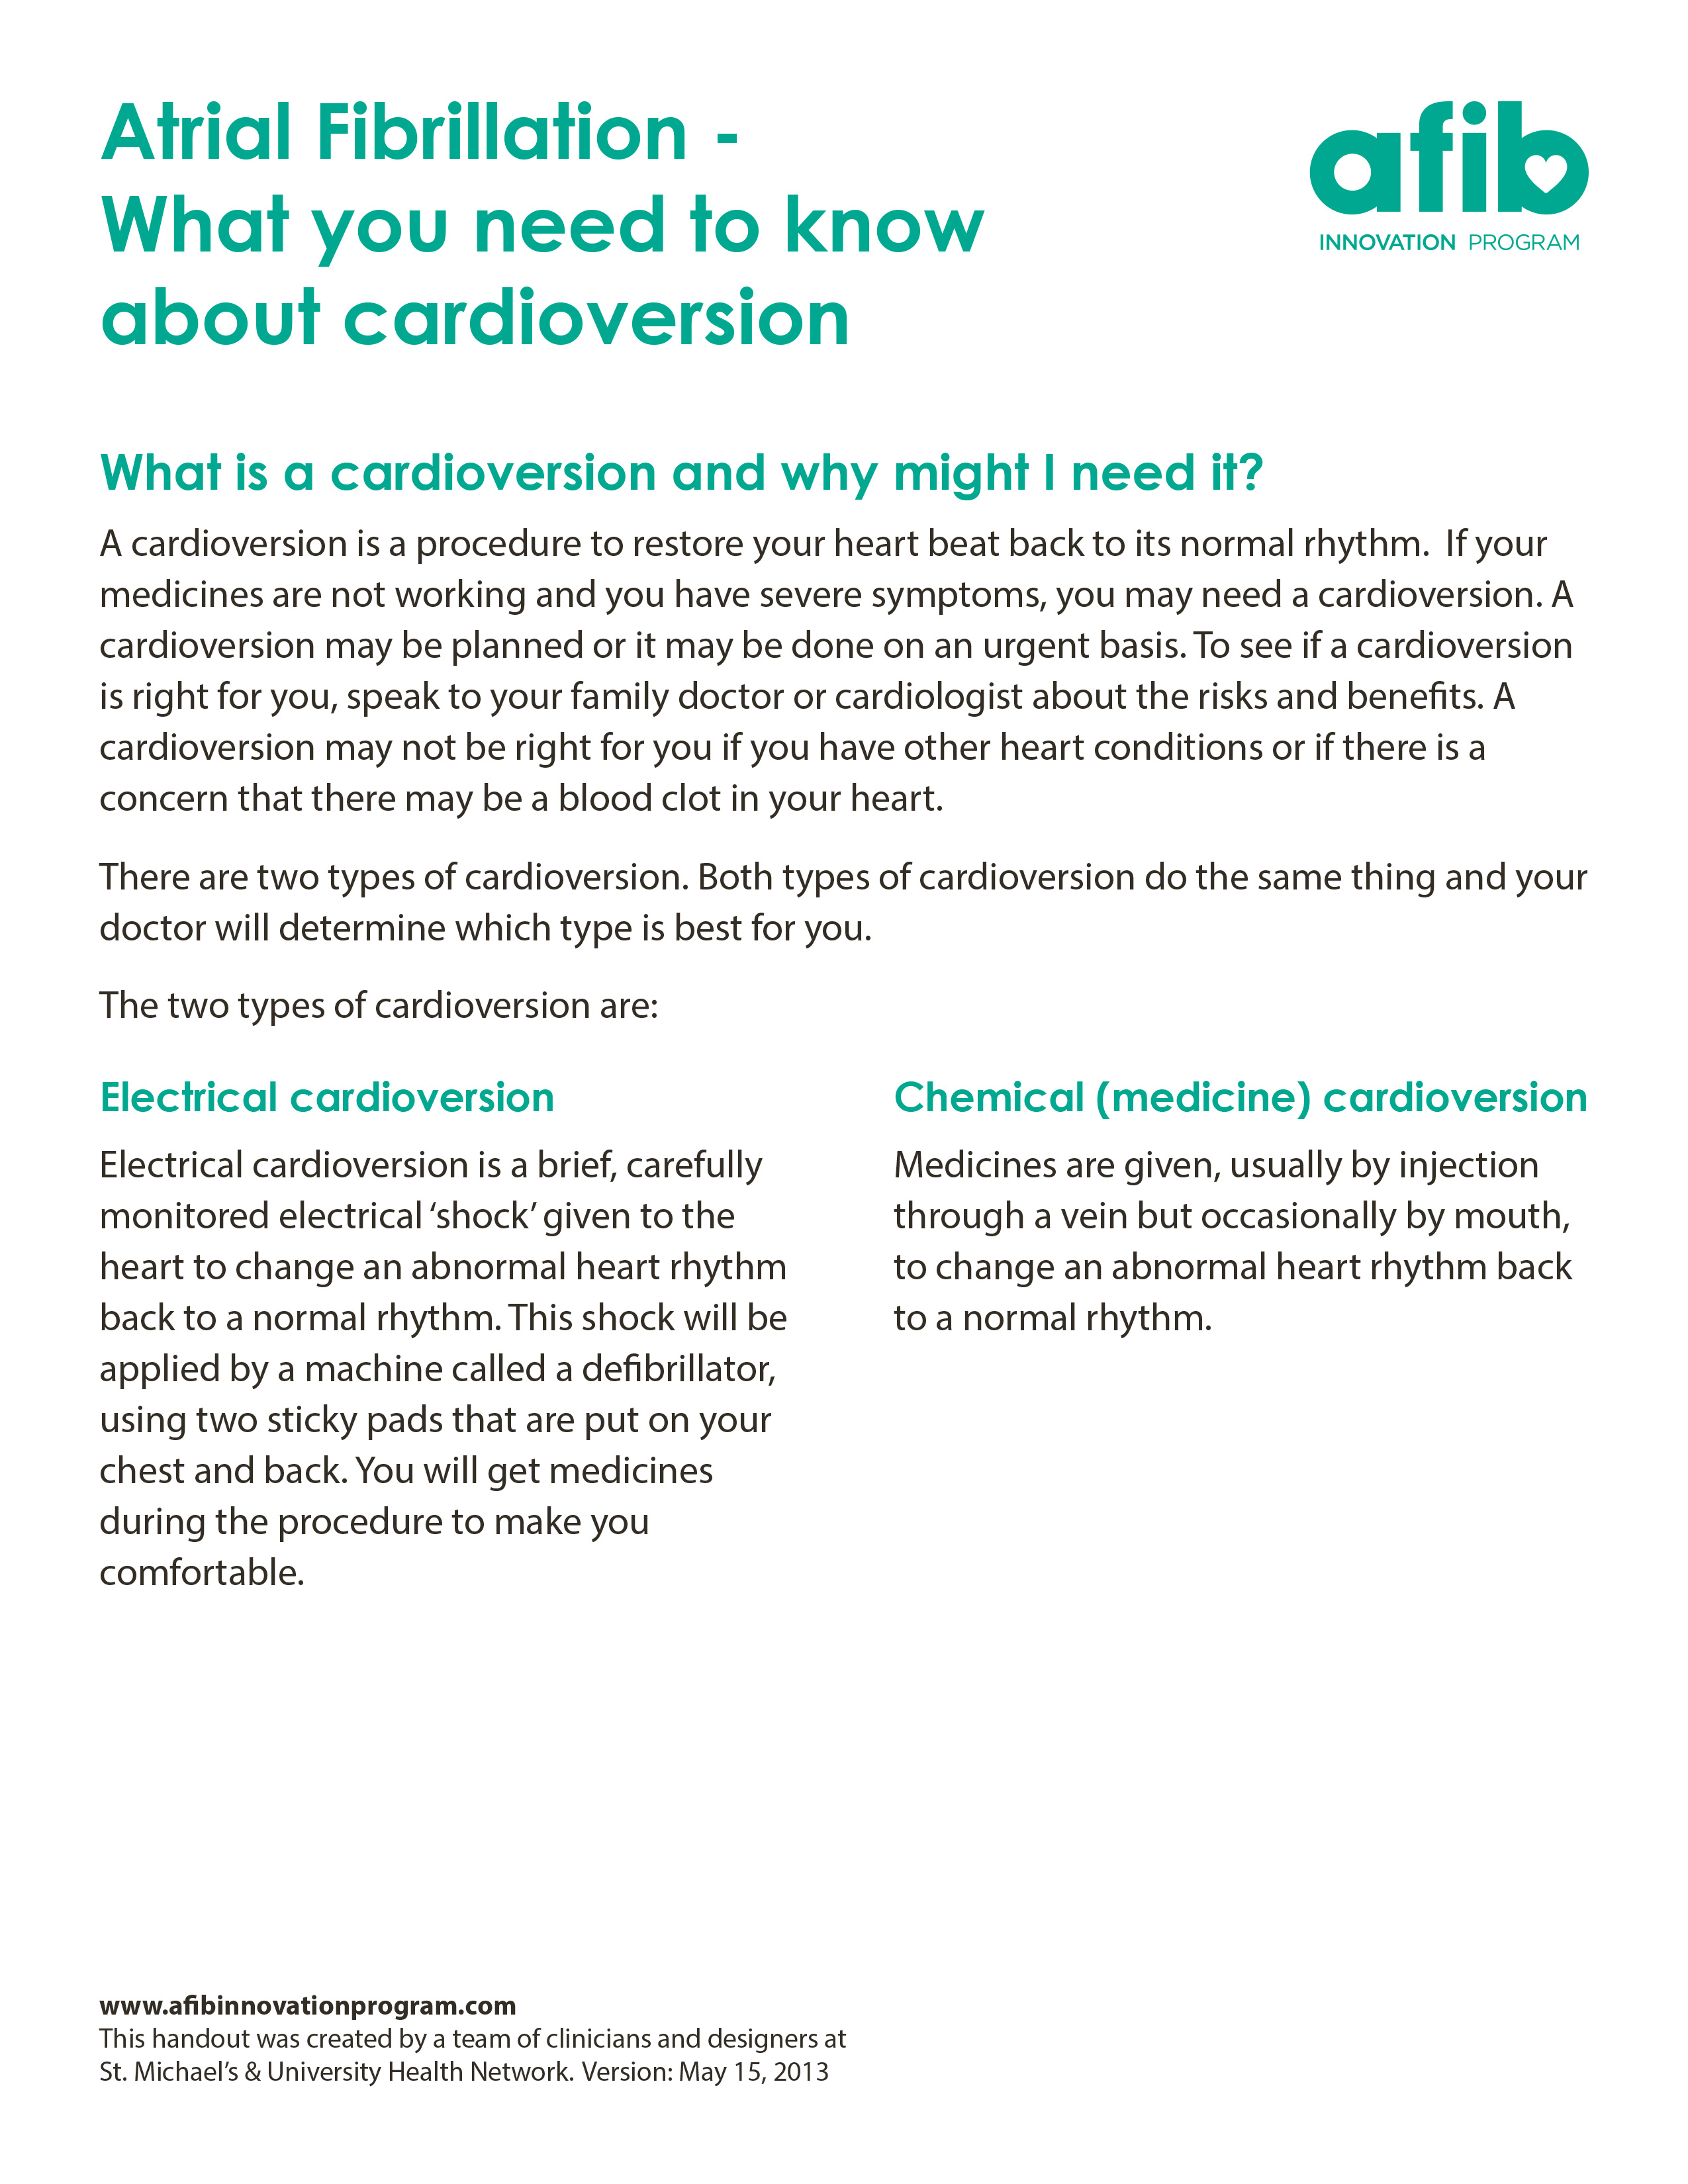 Cardioversion